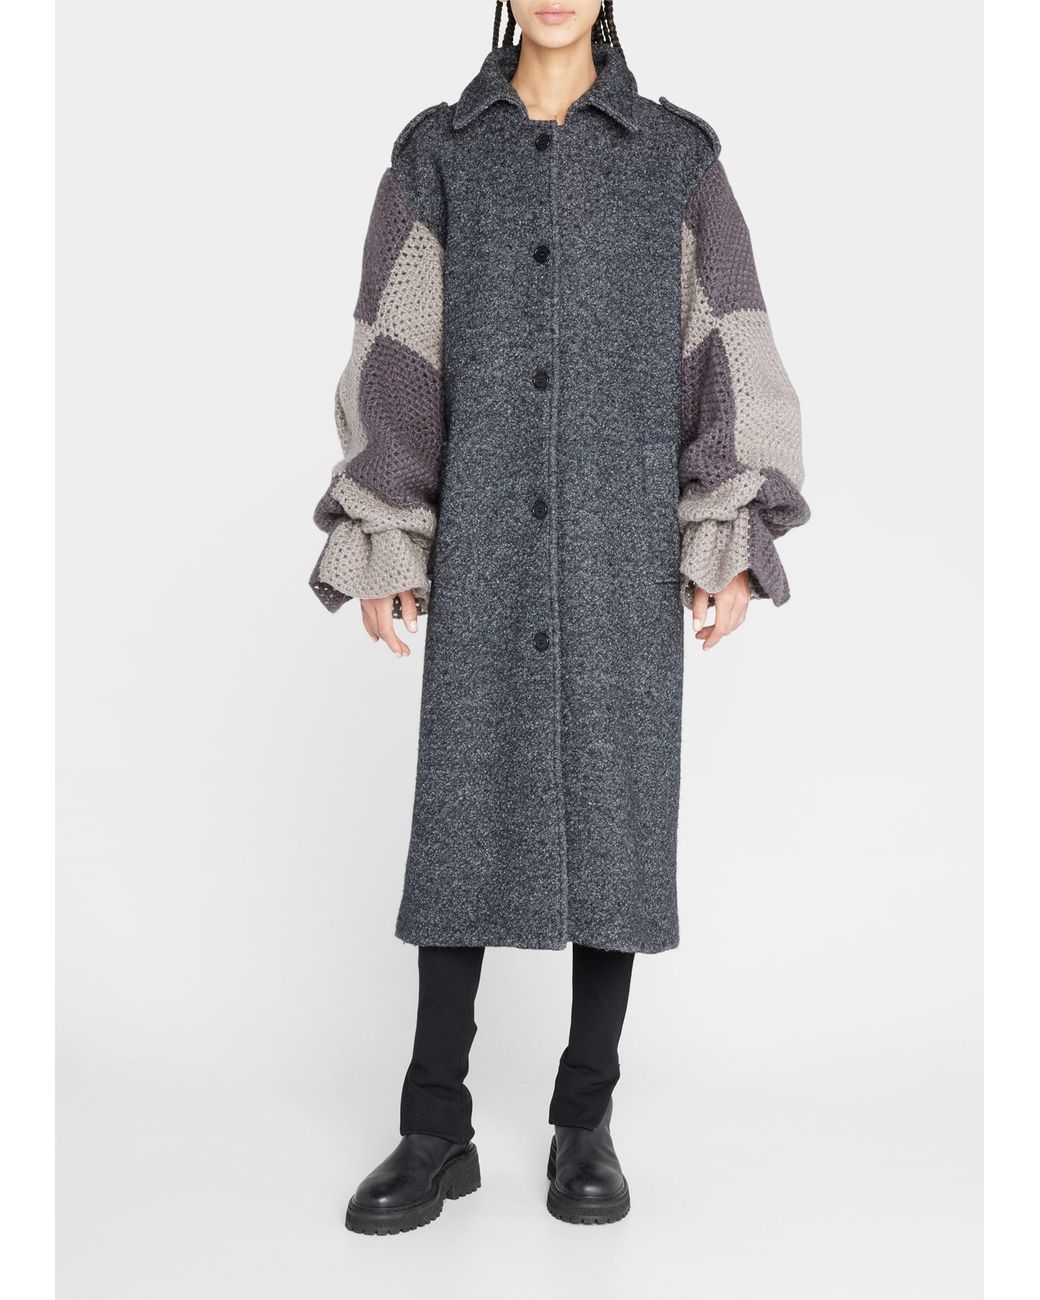 tu lize Grey coat with crochet sleeves - bpconstructores.com